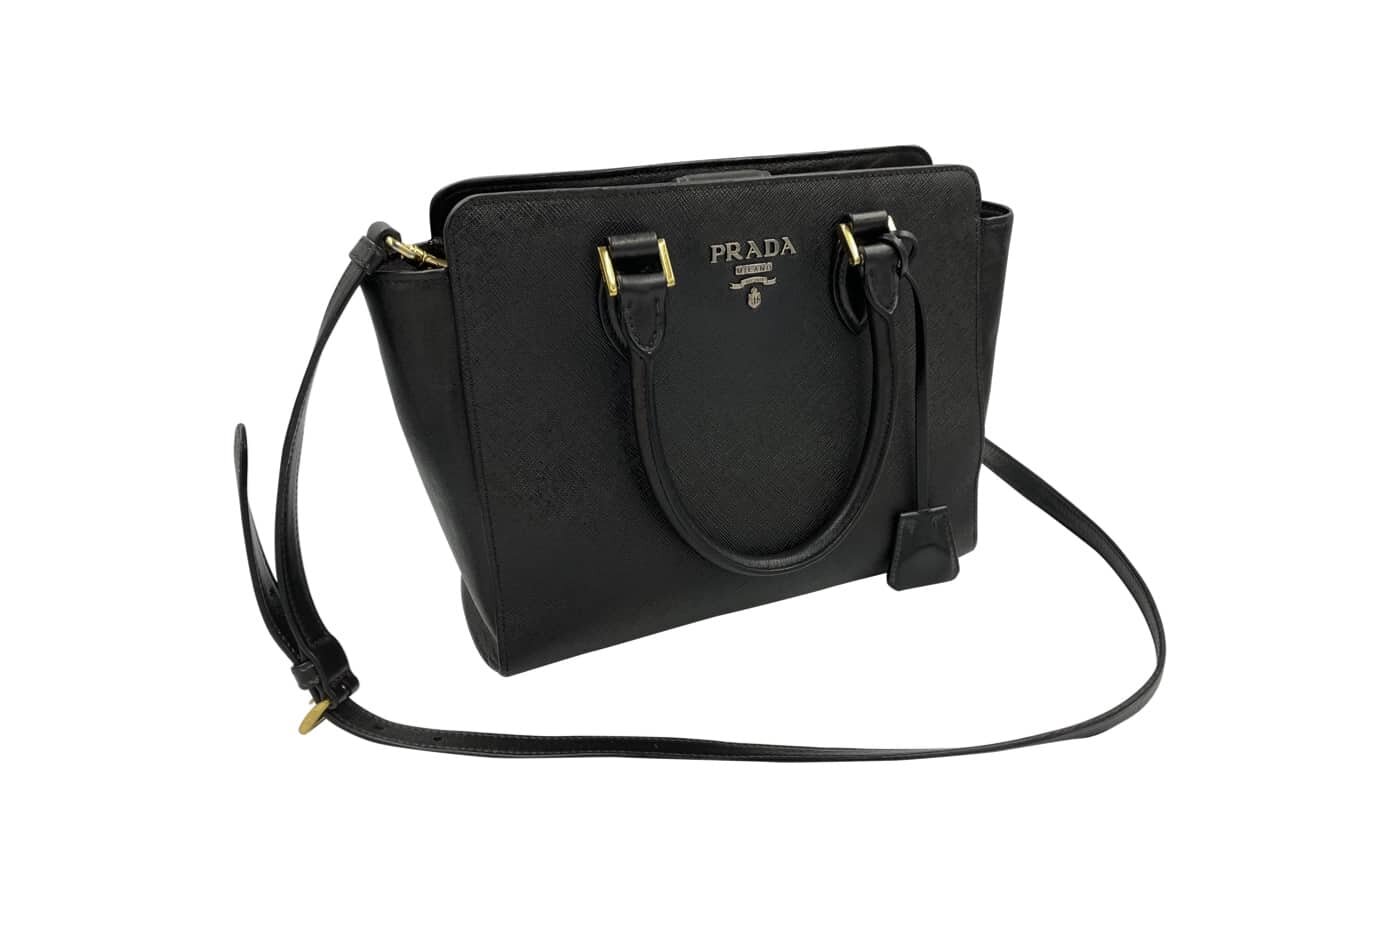 Chanel Handbag Leather Colour Restoration — SoleHeeled